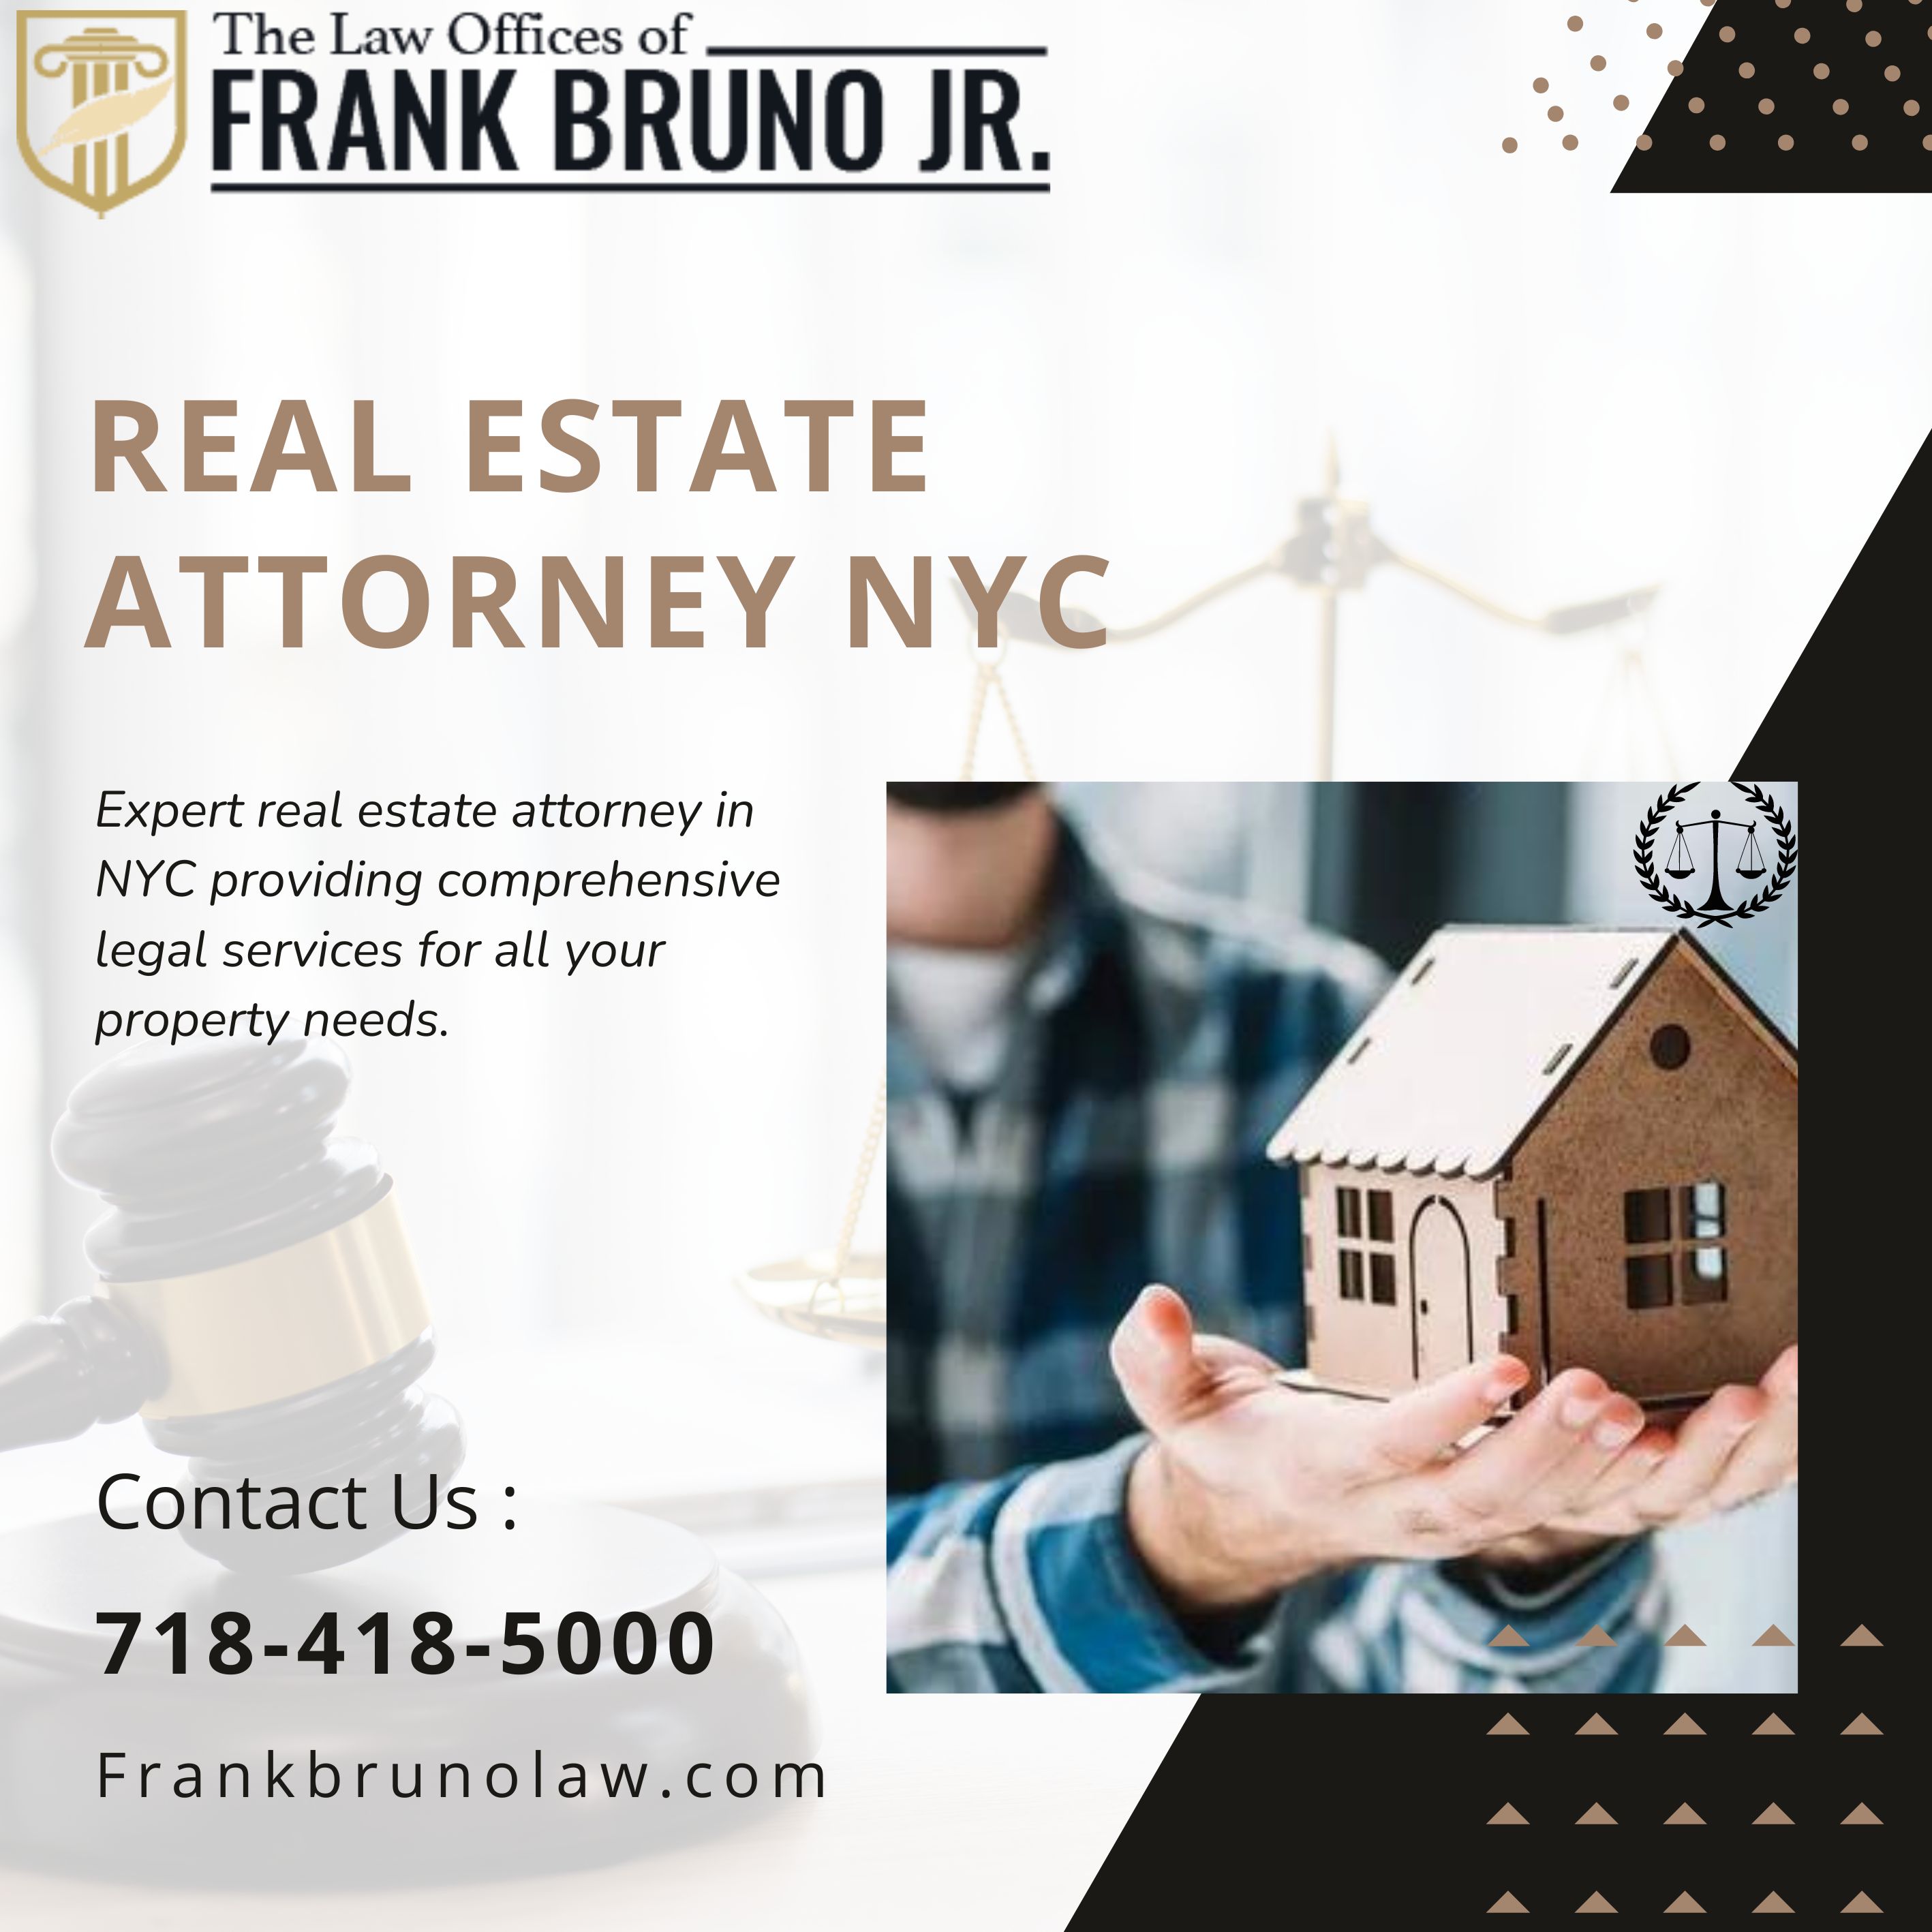 Real Estate Attorney NYC - New York - New York ID1559768 2